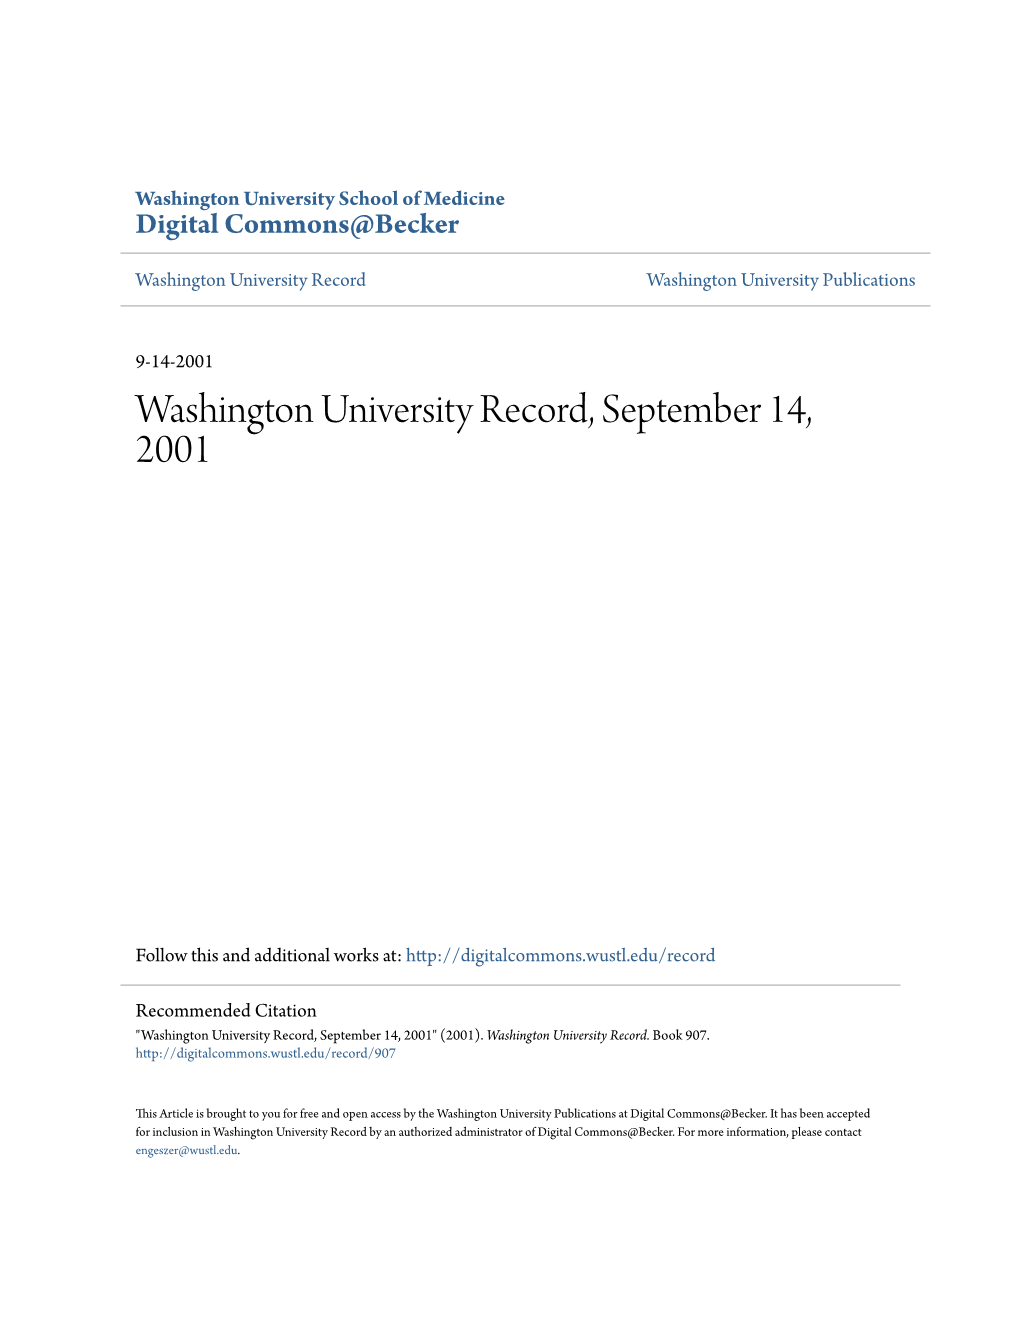 Washington University Record, September 14, 2001